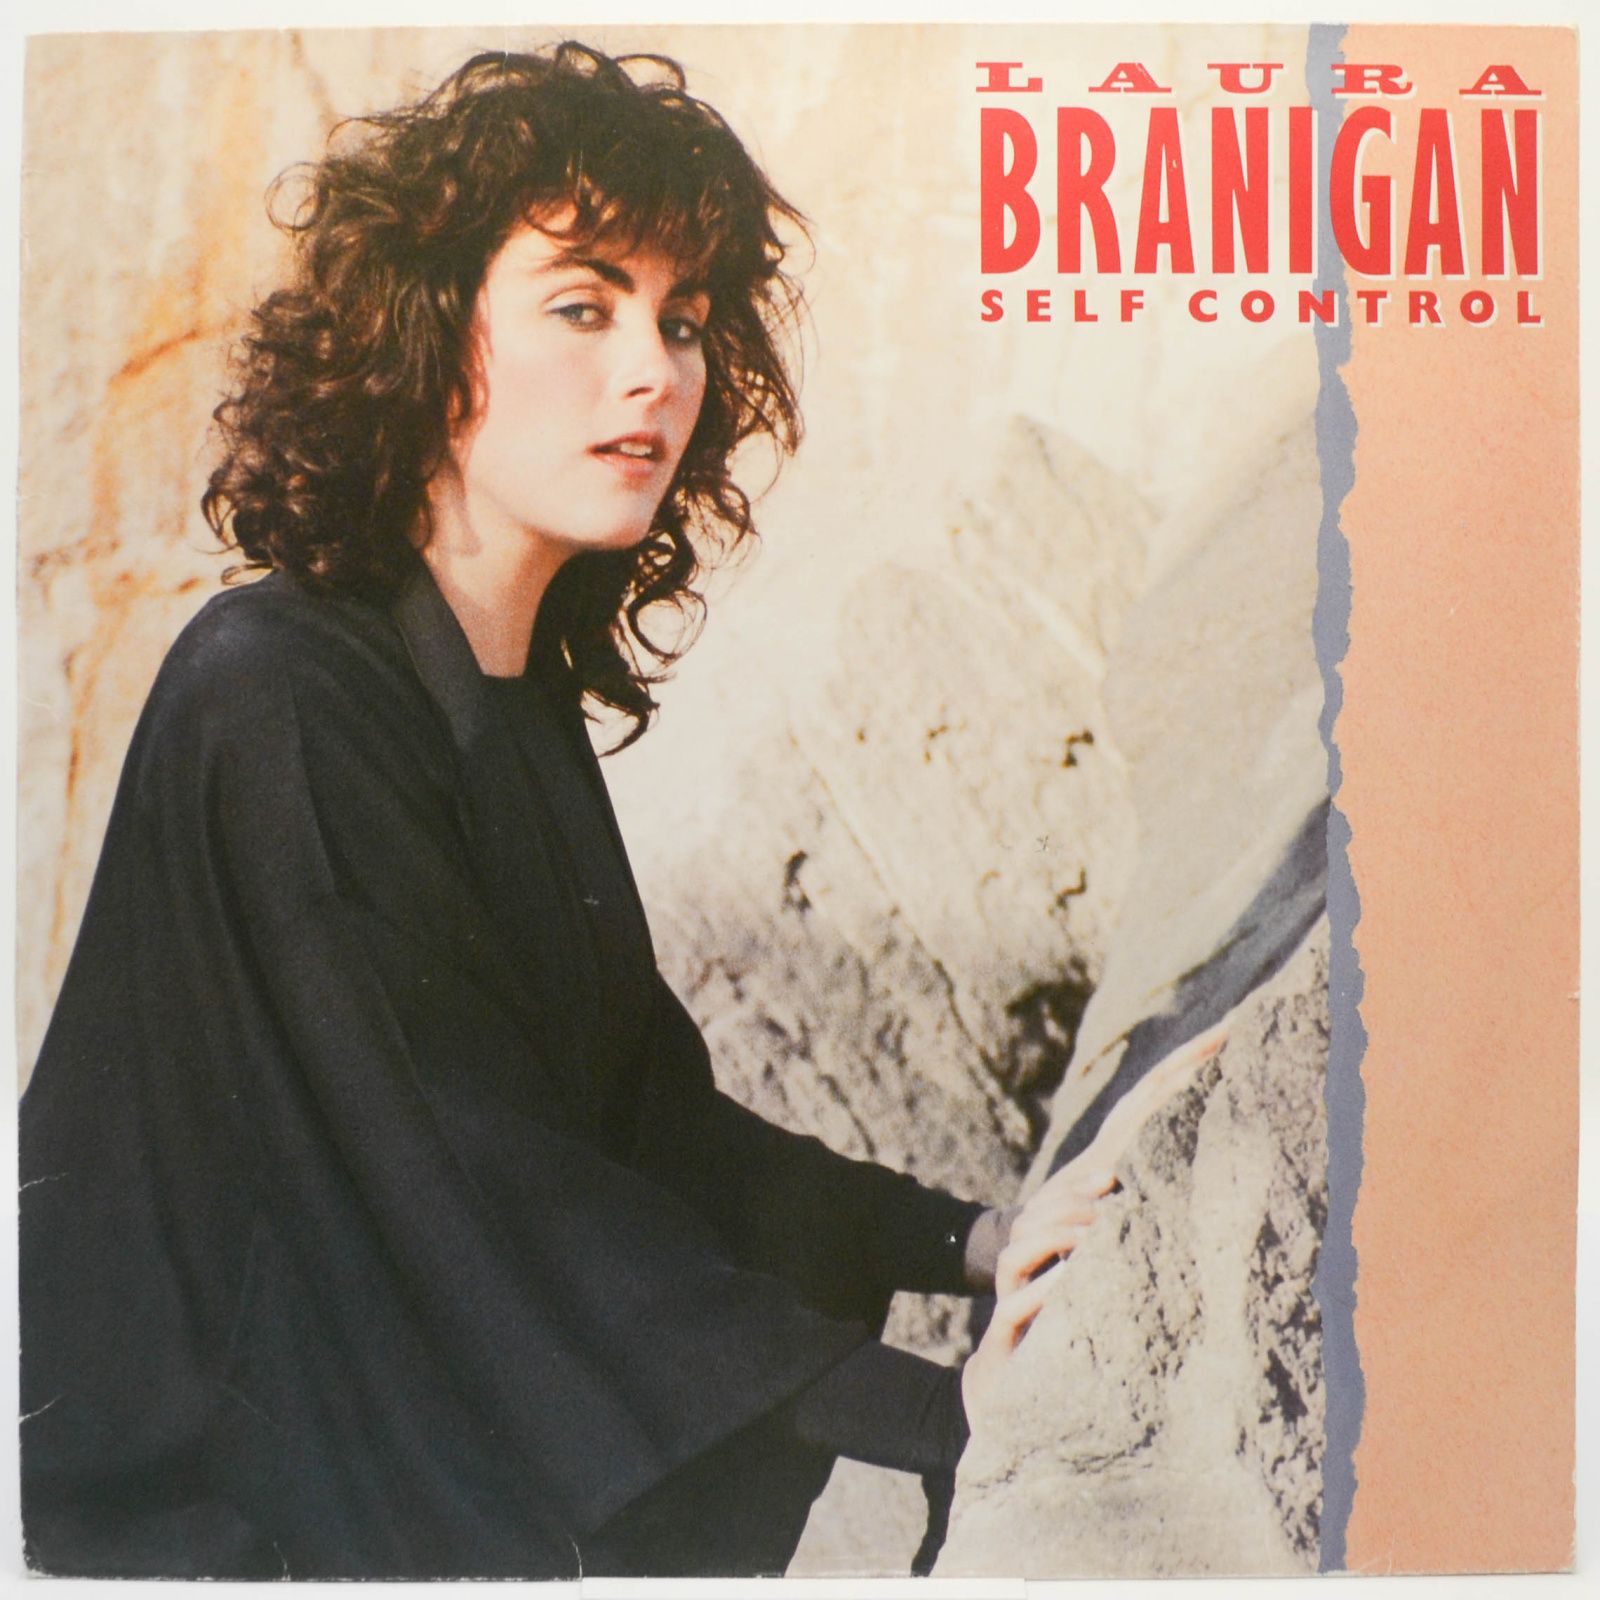 Laura Branigan — Self Control, 1984